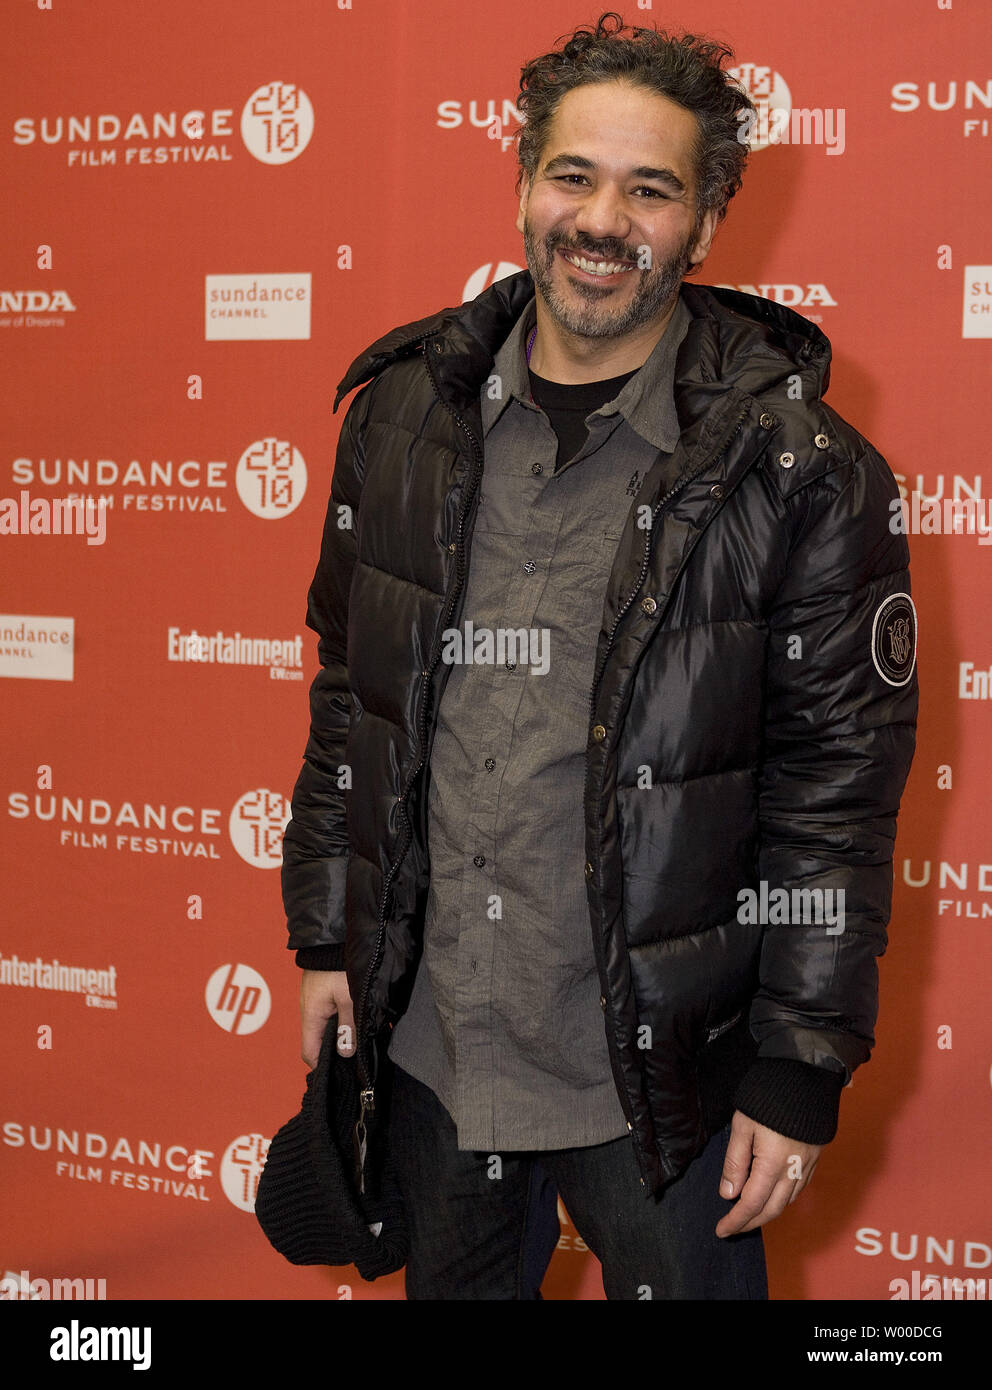 John Ortiz arrives for the world premiere of  'Jack Goes Boating' at the 2010 Sundance Film Festival on January 23, 2010 in Park City, Utah.         UPI/Gary C. Caskey.. Stock Photo